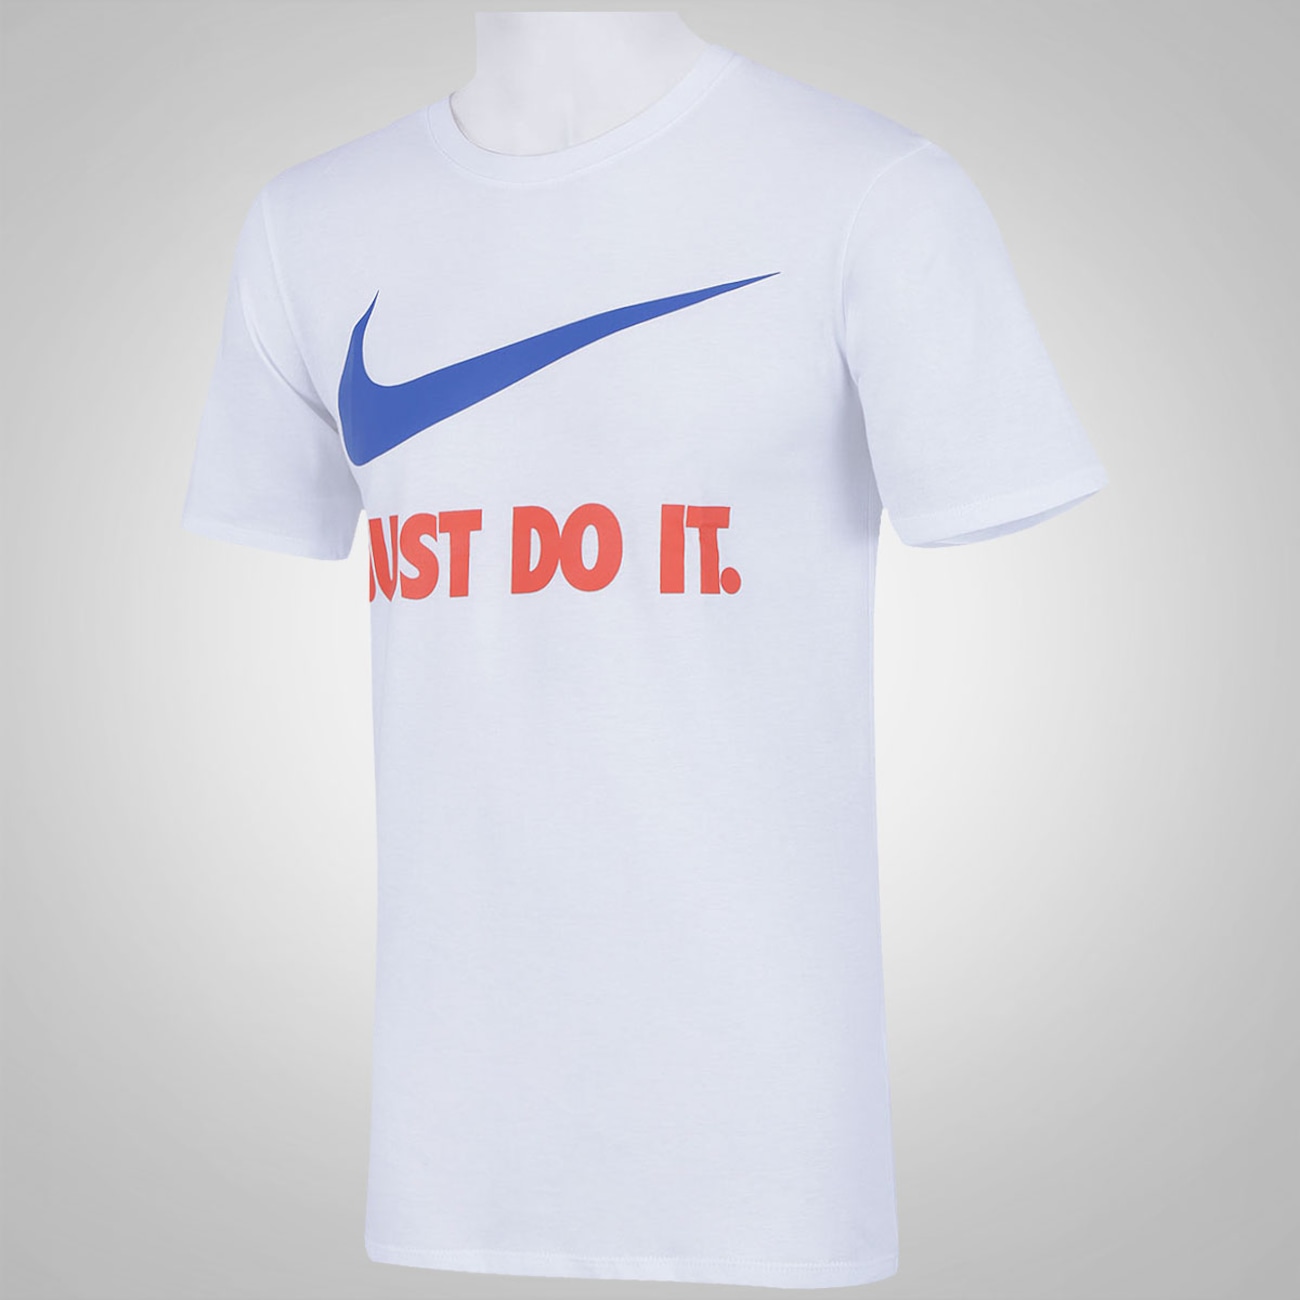 Camiseta Nike New Just Do It - Masculina - Centauro